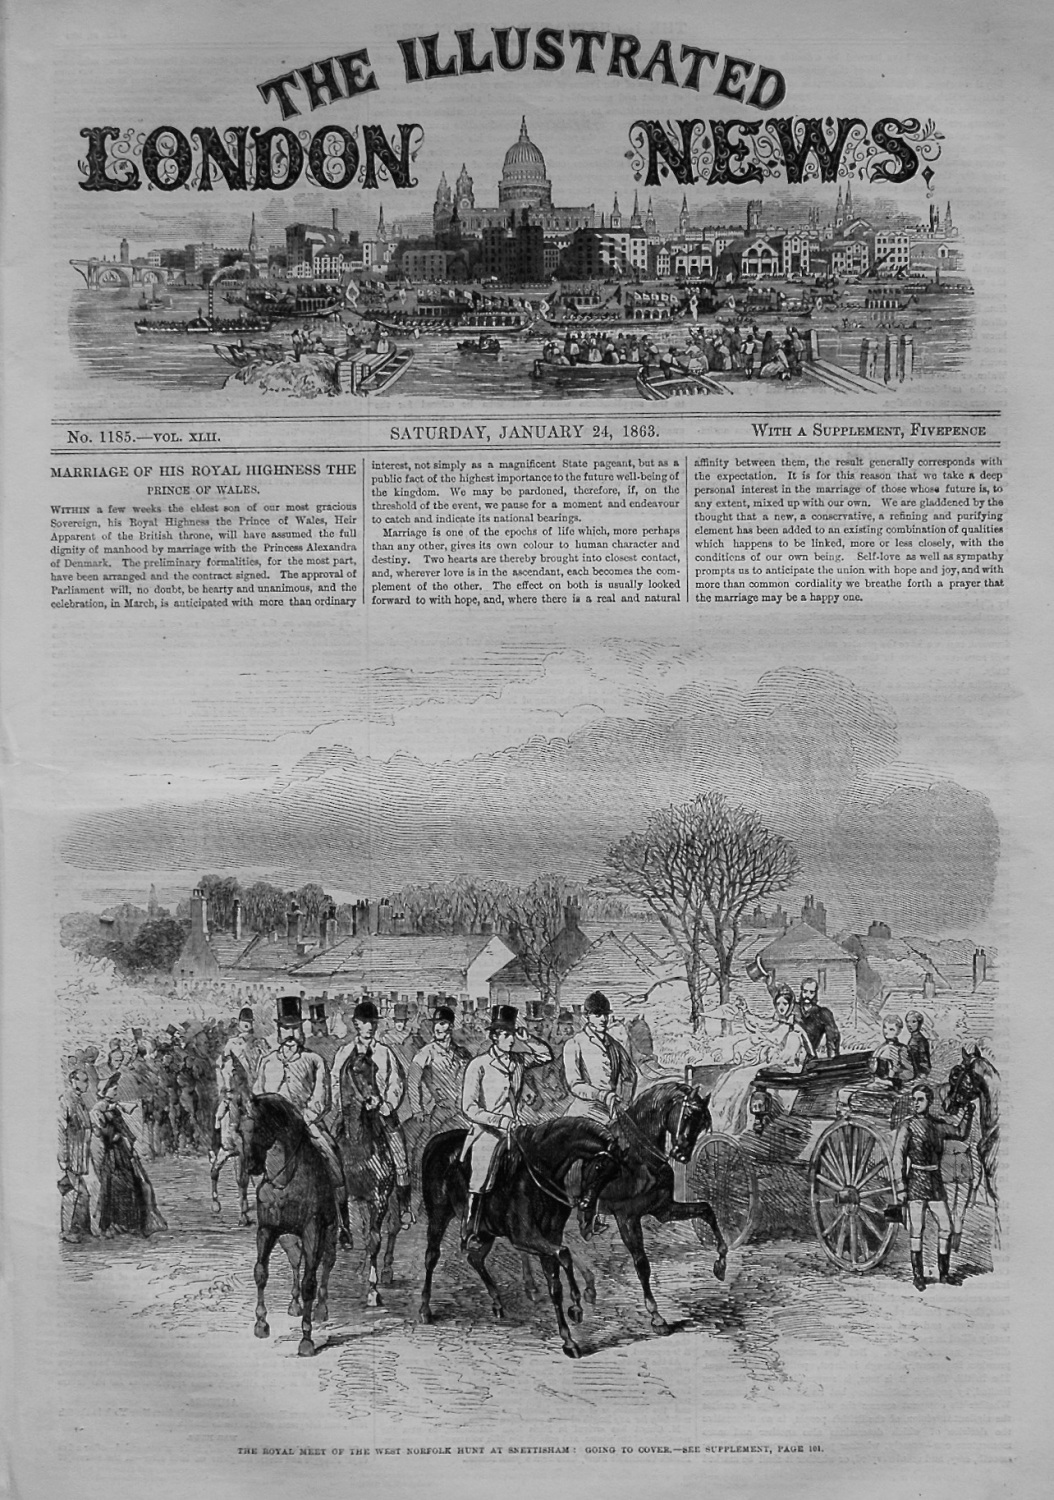 Illustrated London News. January 24th, 1863.